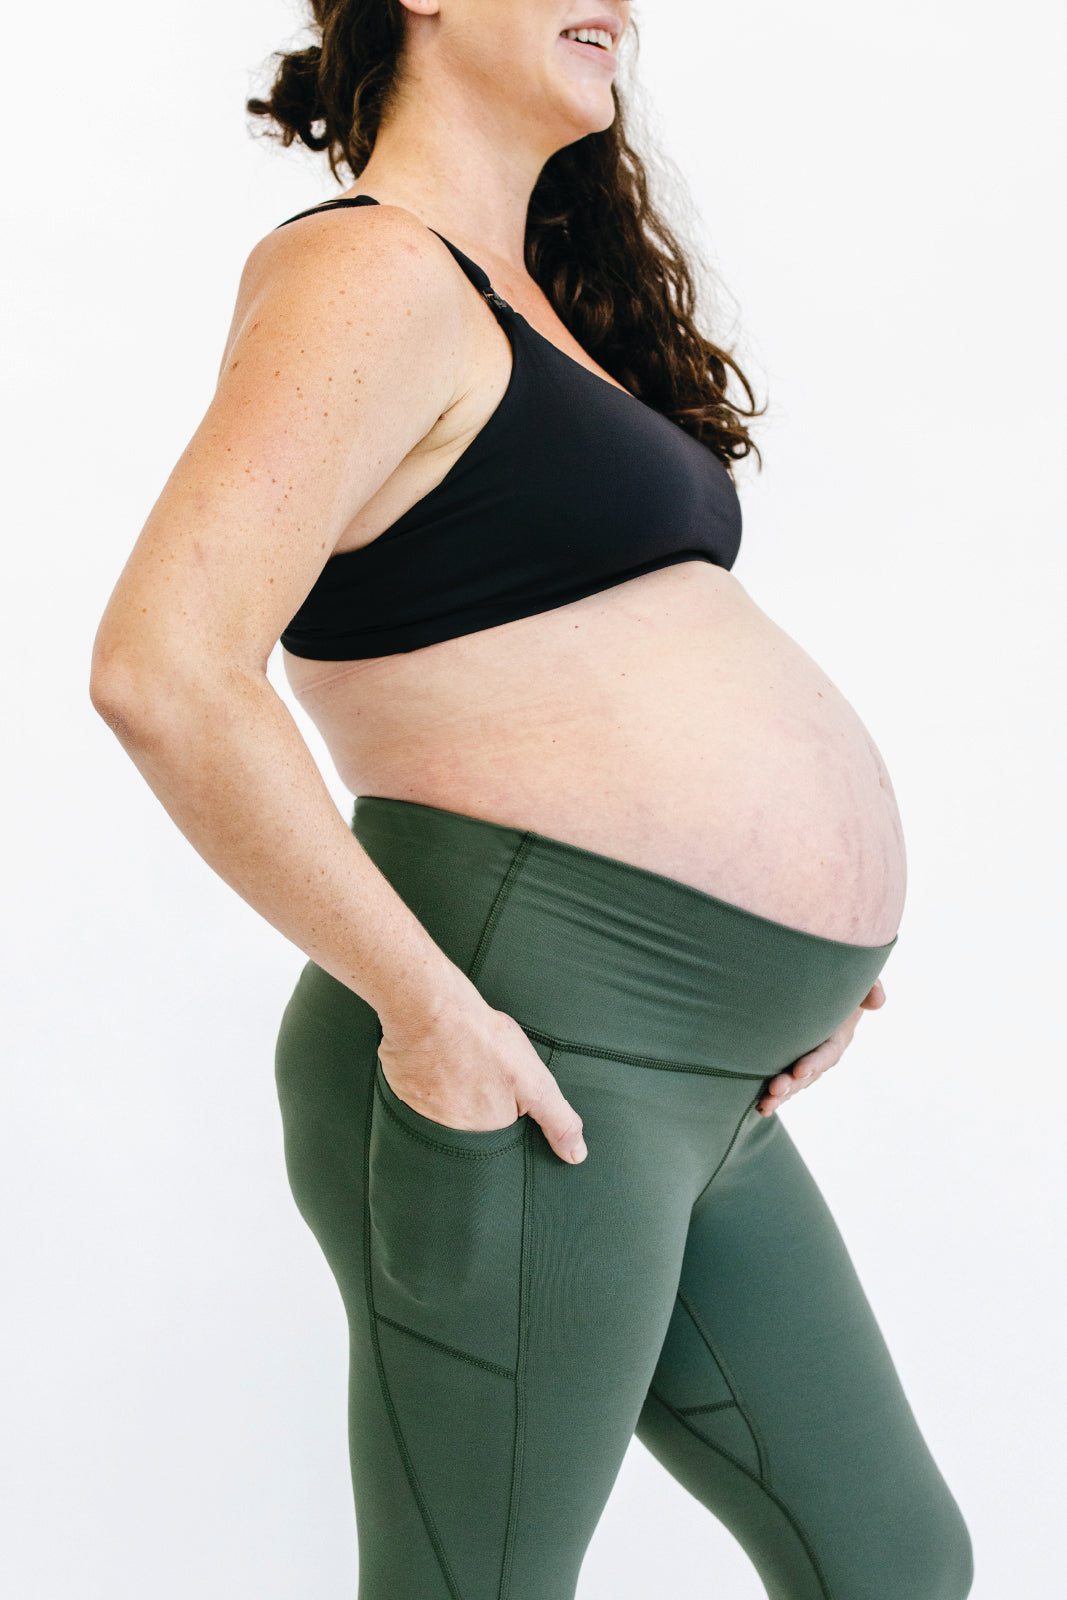 Maternity Sports Legging - Khaki Green– Angel Maternity